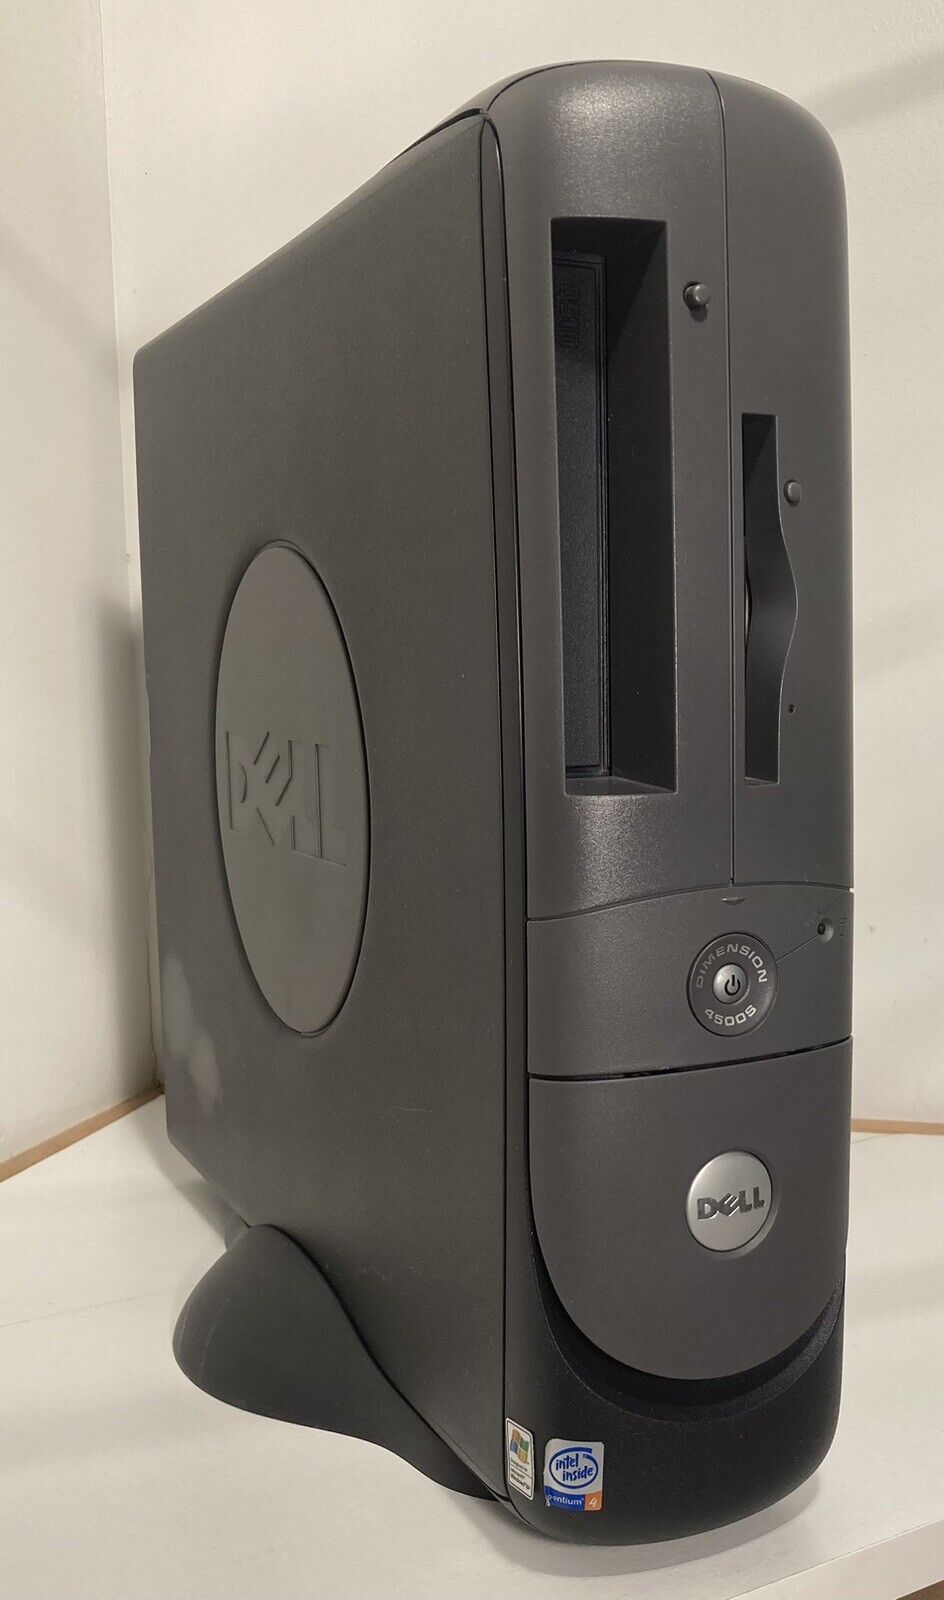 Dell Dimension 4500S Desktop/Tower, Vintage Windows 98 SE/Serial RS232/Parallel